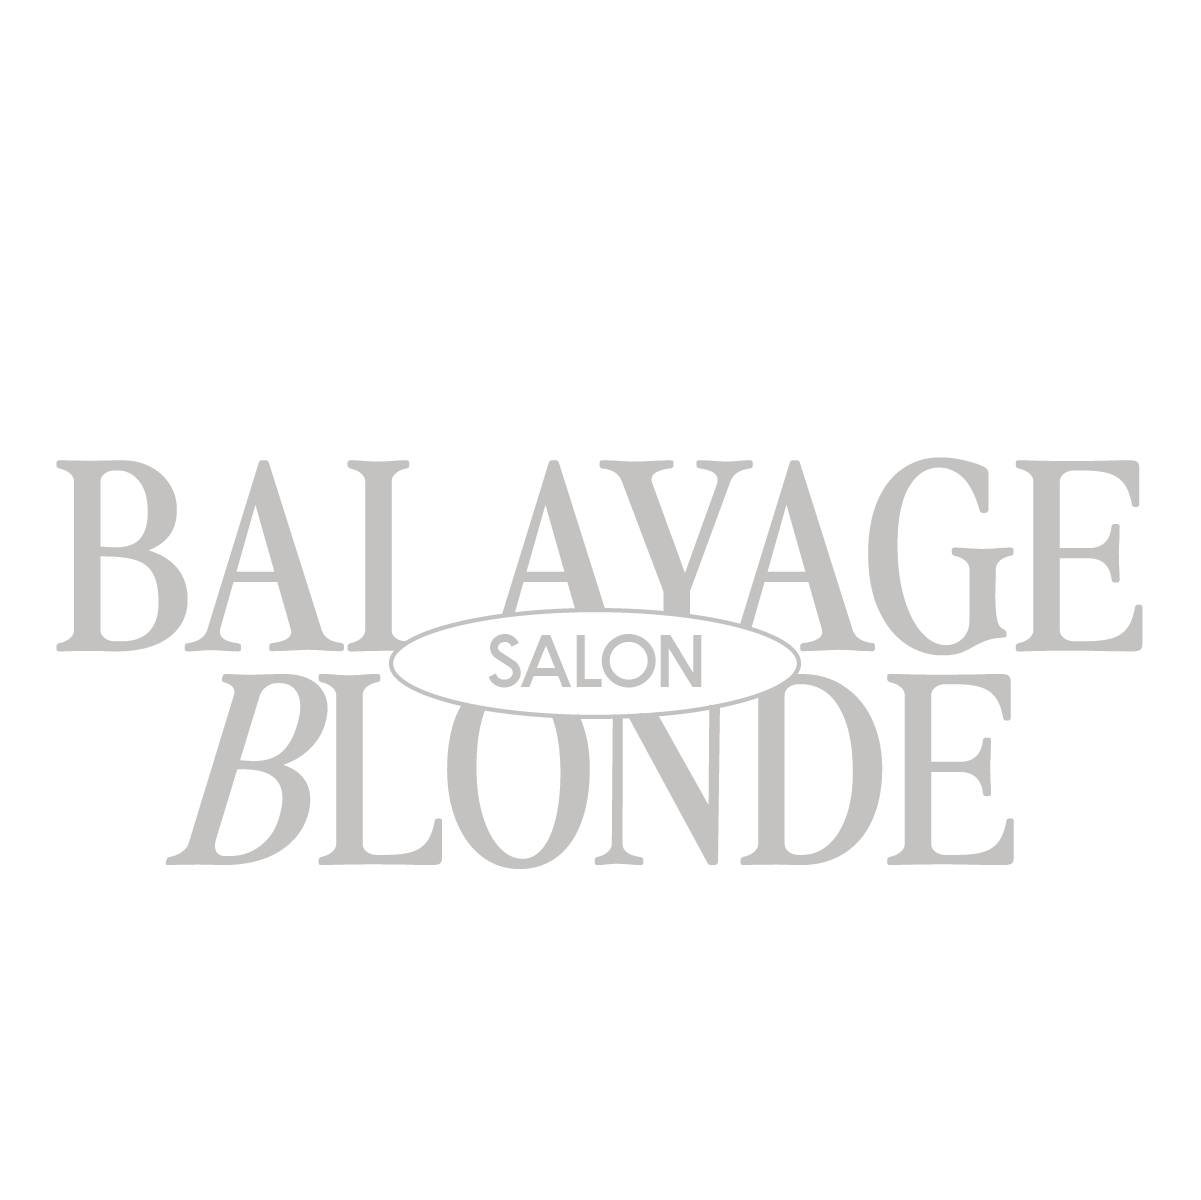 Services — Balayage Blonde Salon